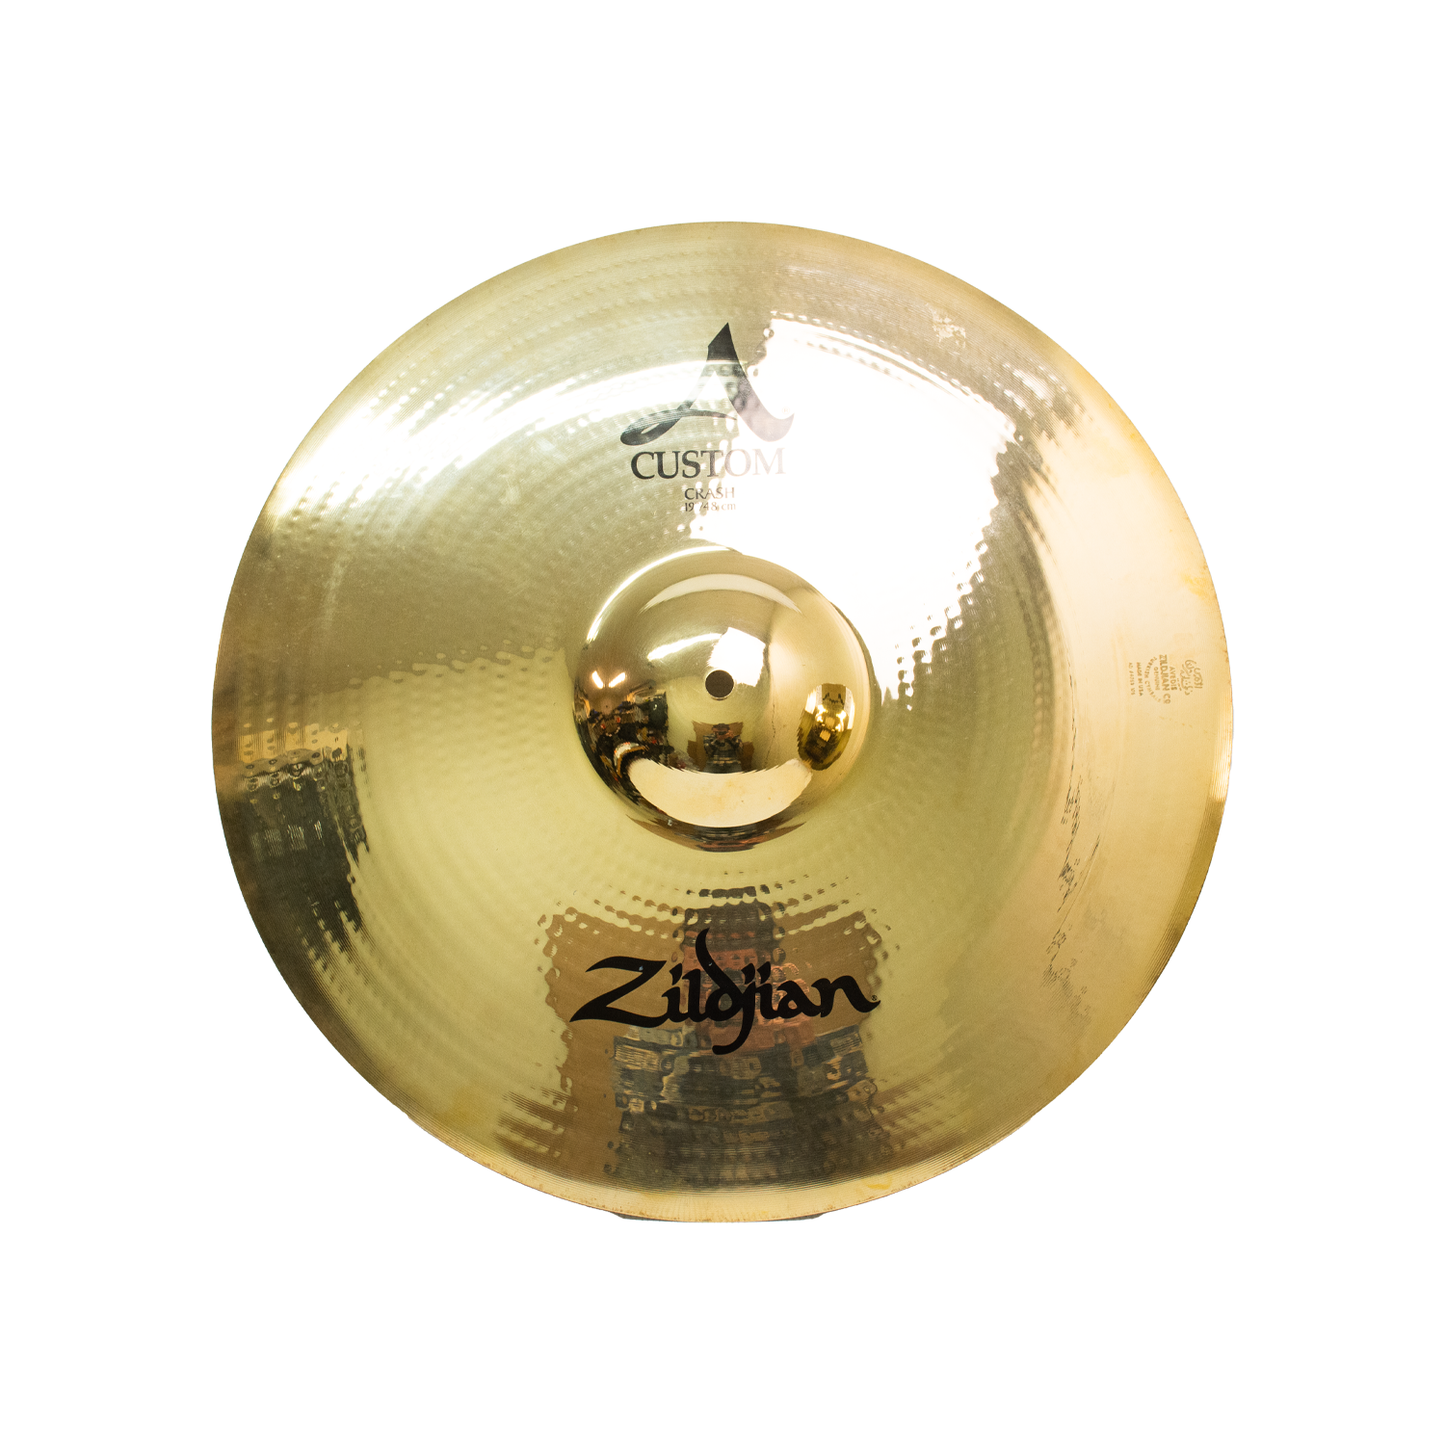 Zildjian Custom 19" Cymbal